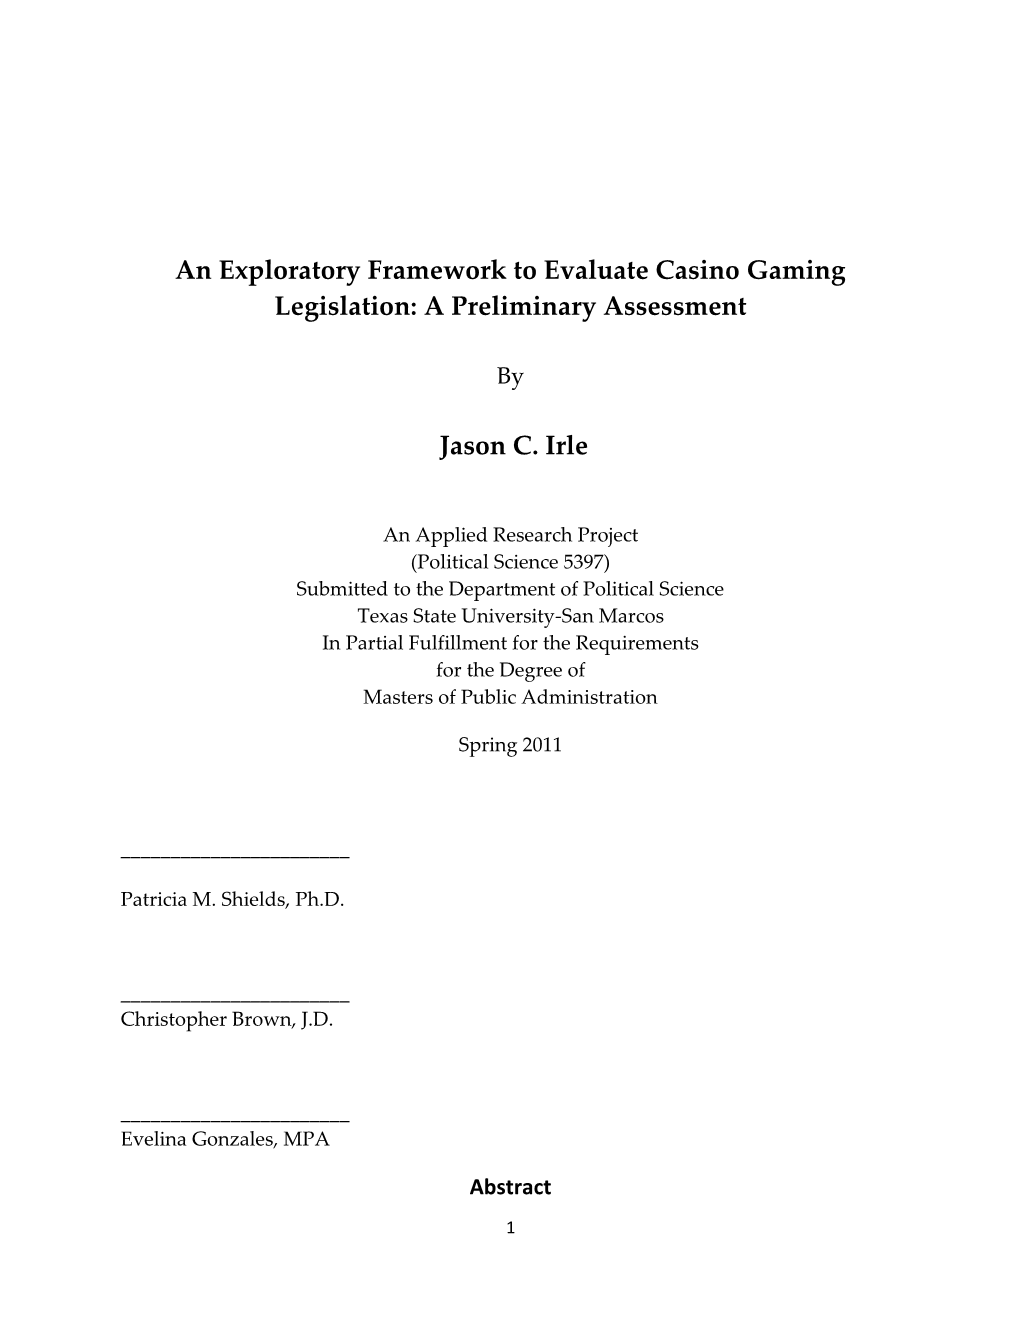 An Exploratory Framework to Evaluate Casino Gaming Legislation: a Preliminary Assessment